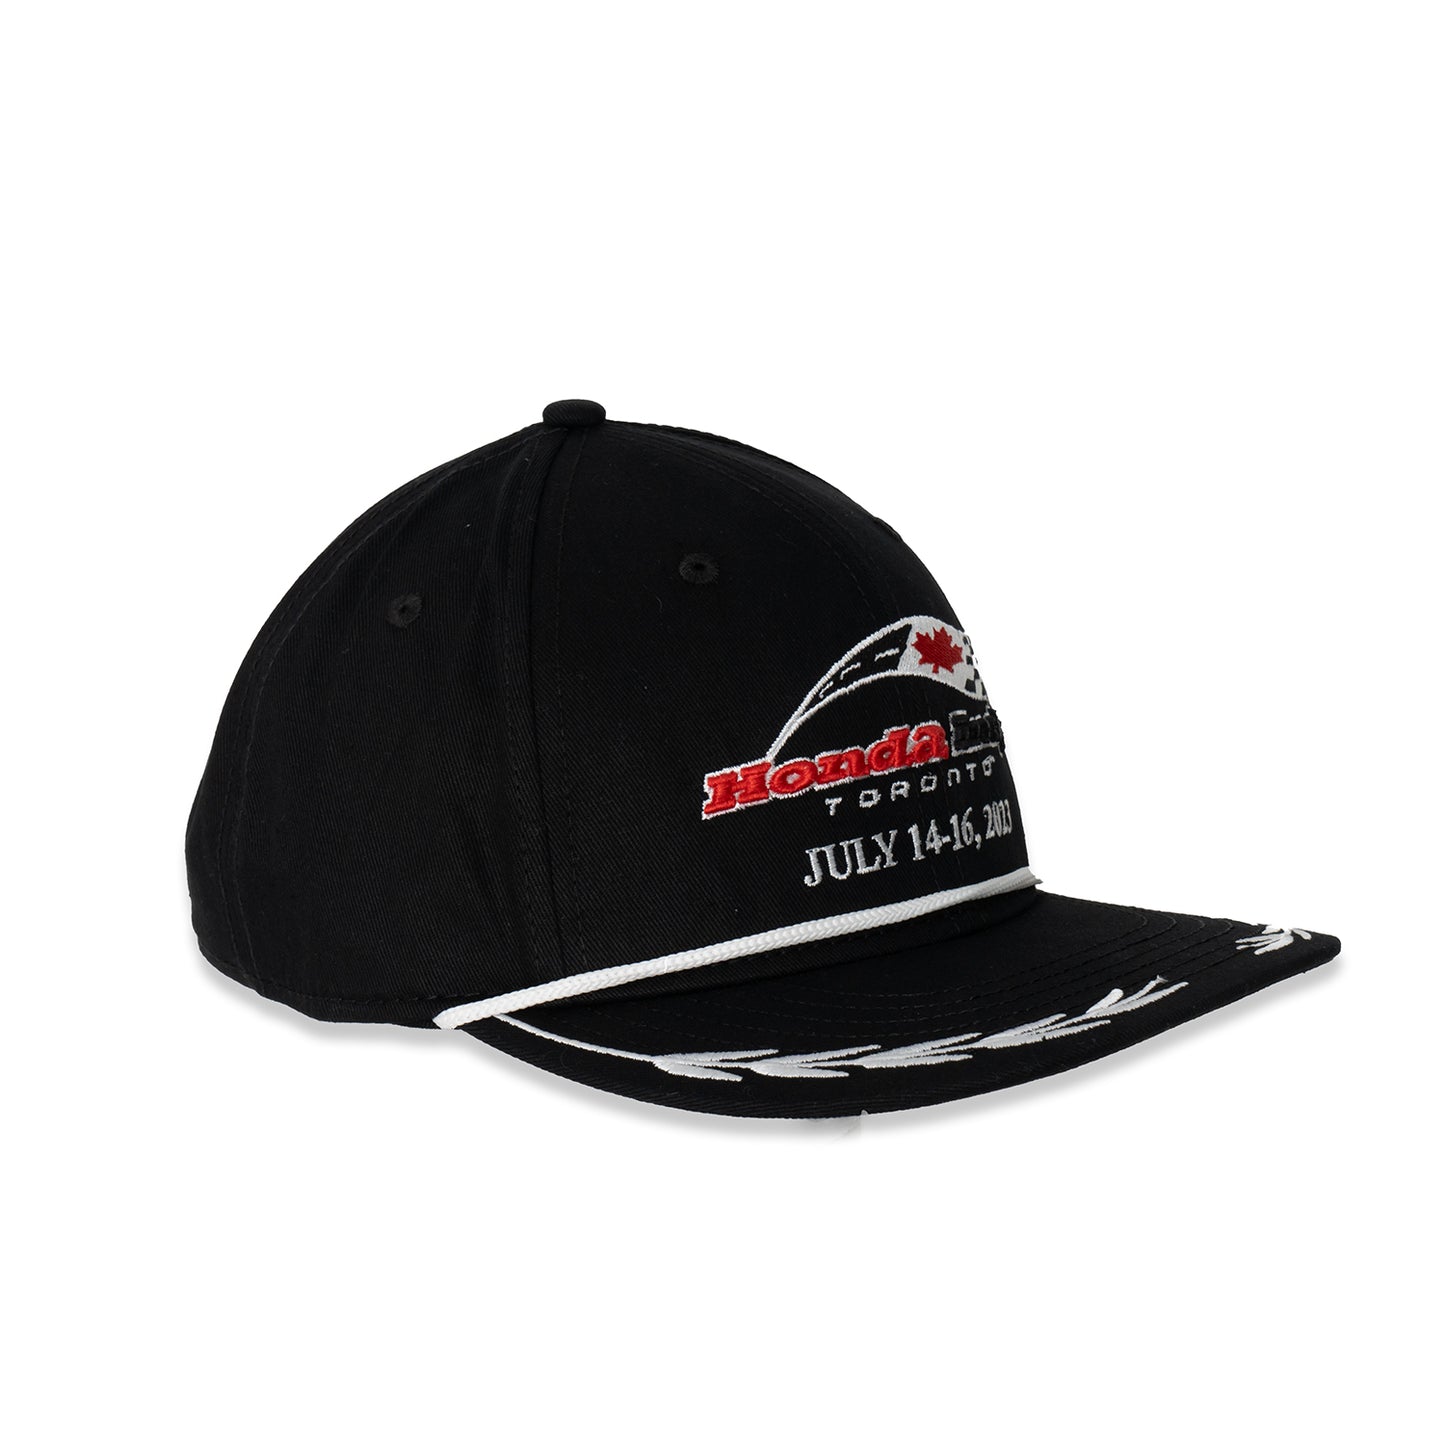 2023 Honda Indy Toronto Flatbill Event Hat - Black